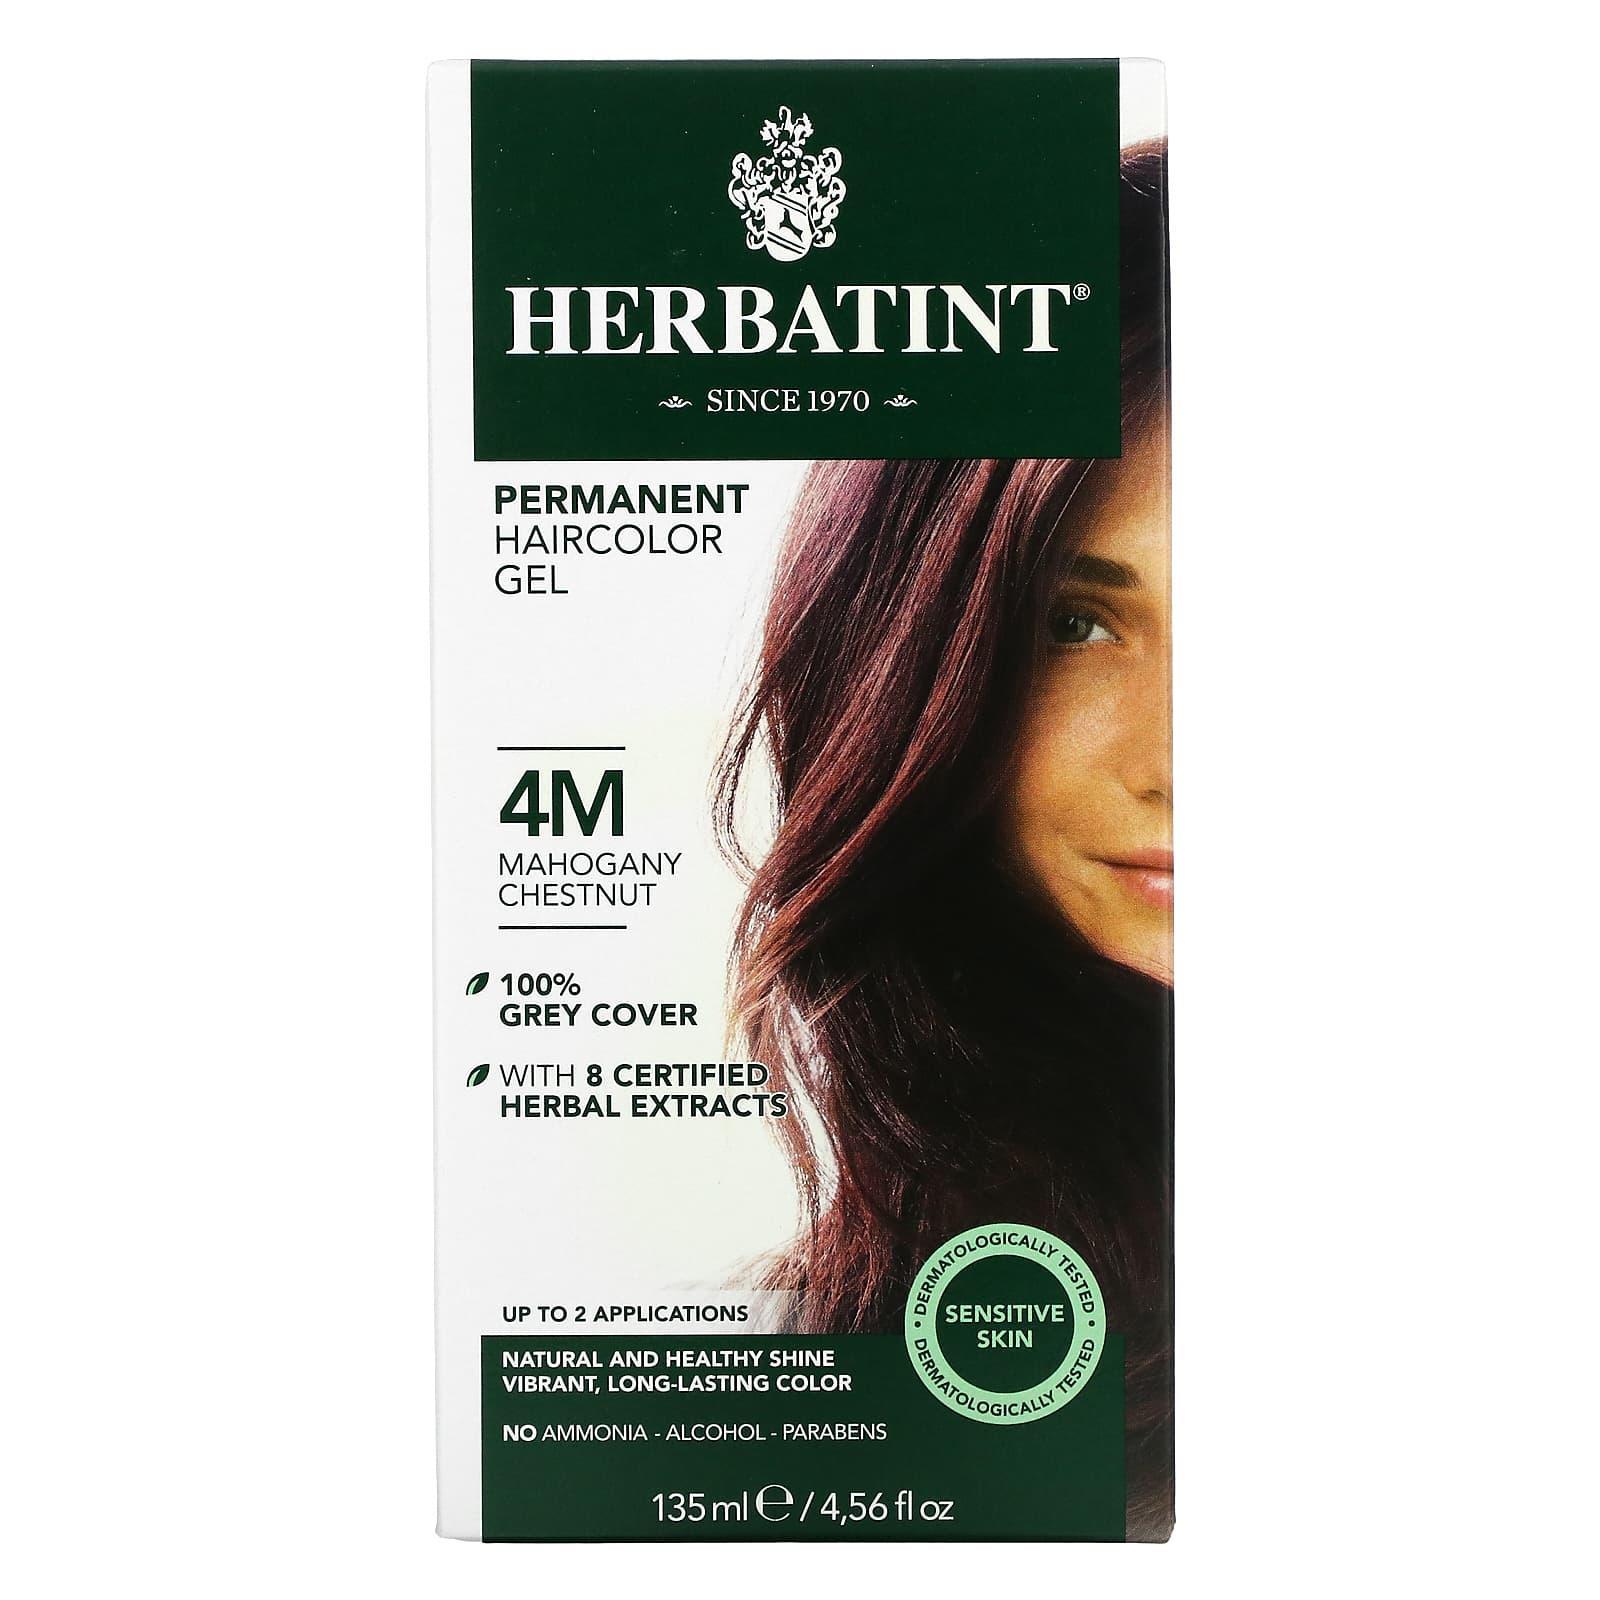 Herbatint (Antica Herbavita), Permanent Haircolor Gel, 4M, Mahogany Chestnut, 4.56 fl oz (135 ml)